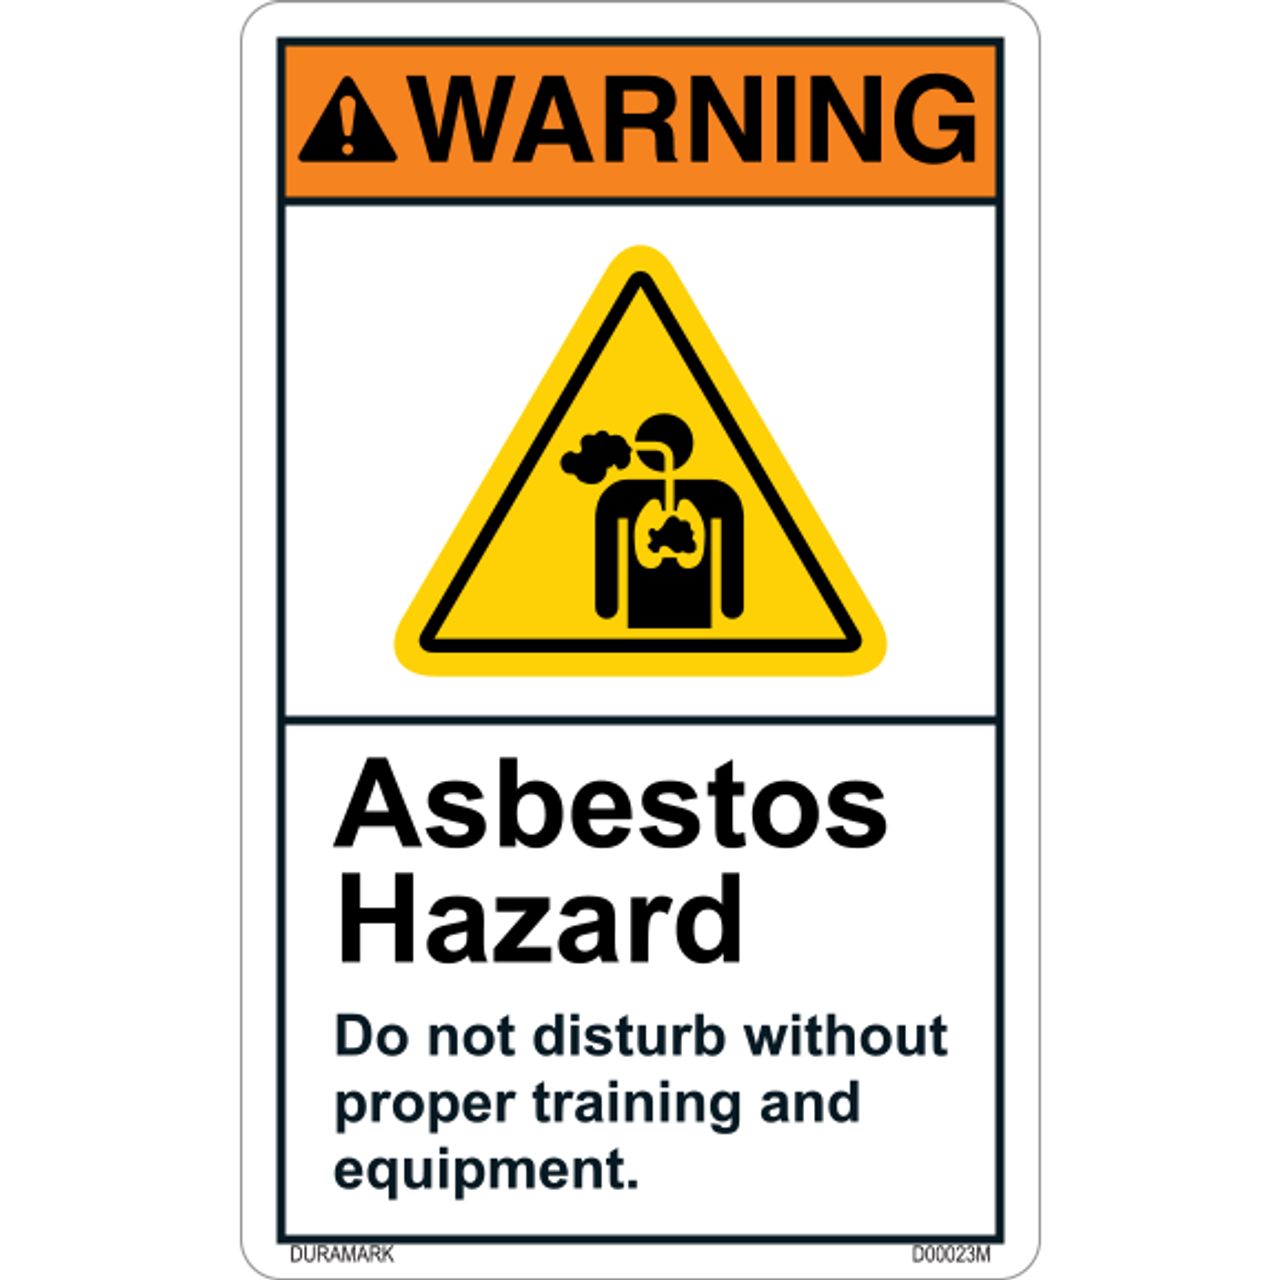 ANSI Safety Label - Warning - Asbestos Hazard - Proper Equipment